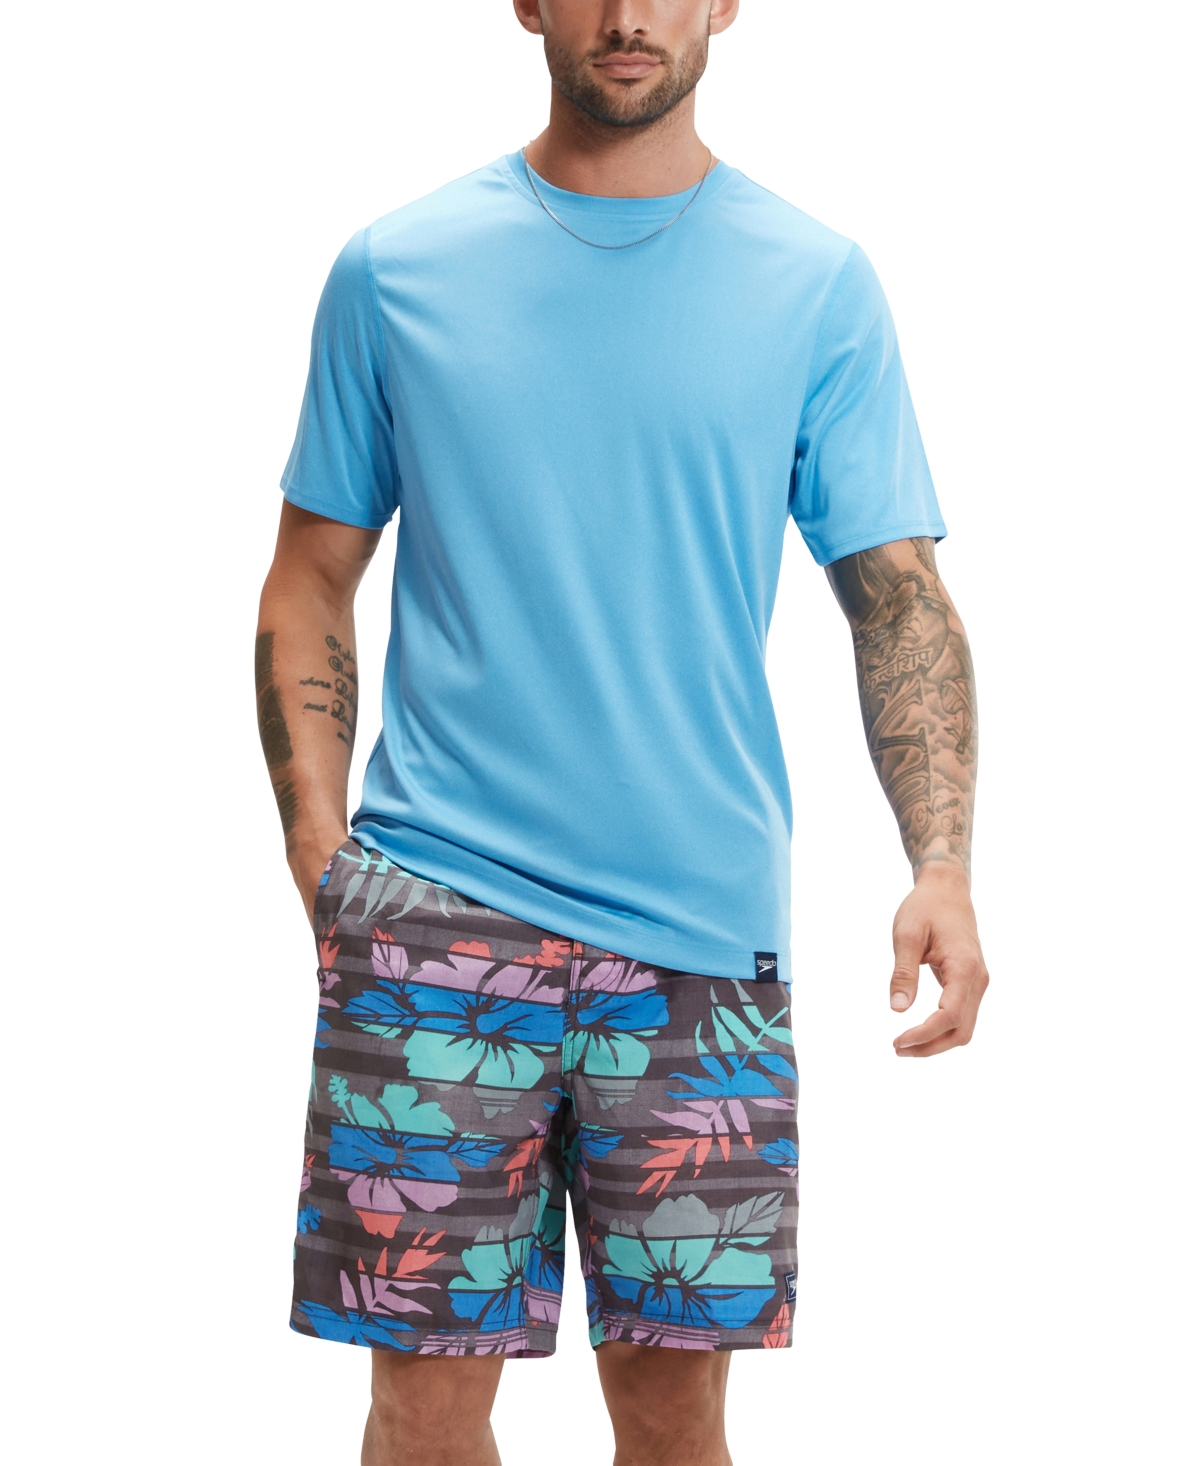 Men's Short Sleeve Crewneck Performance Graphic Swim Shirt - Tranquil Blue